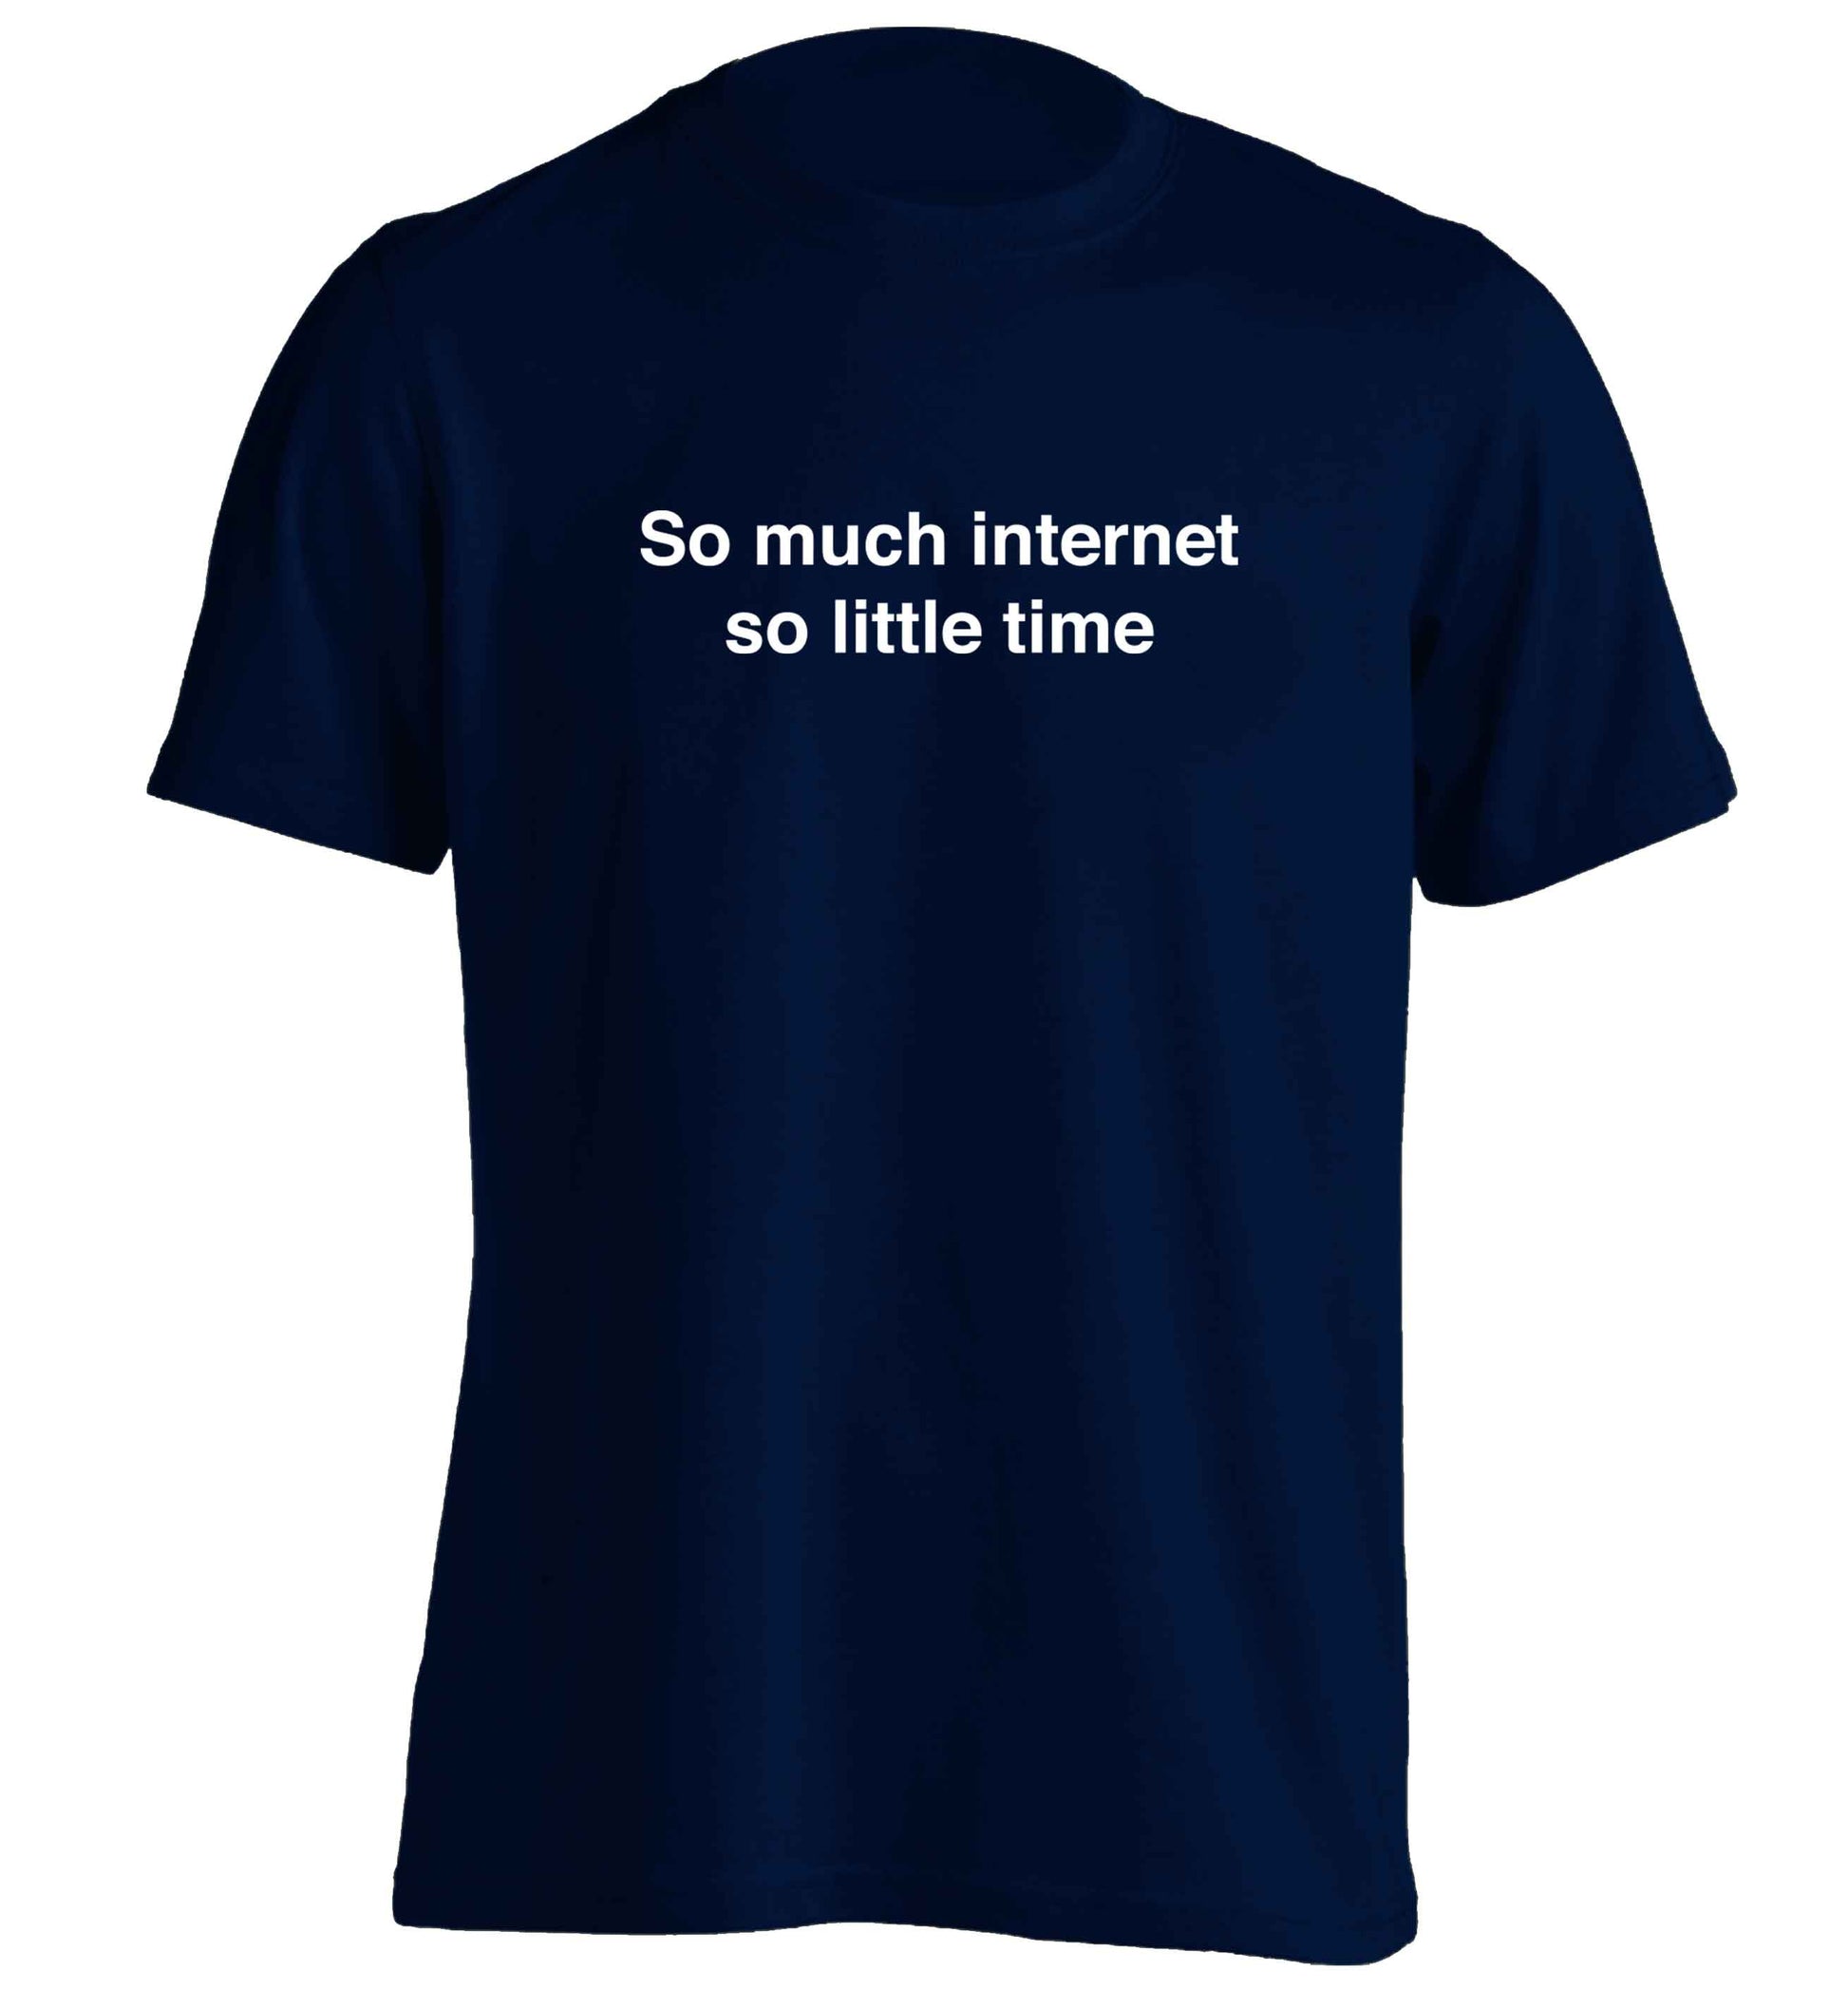 So much internet so little time adults unisex navy Tshirt 2XL